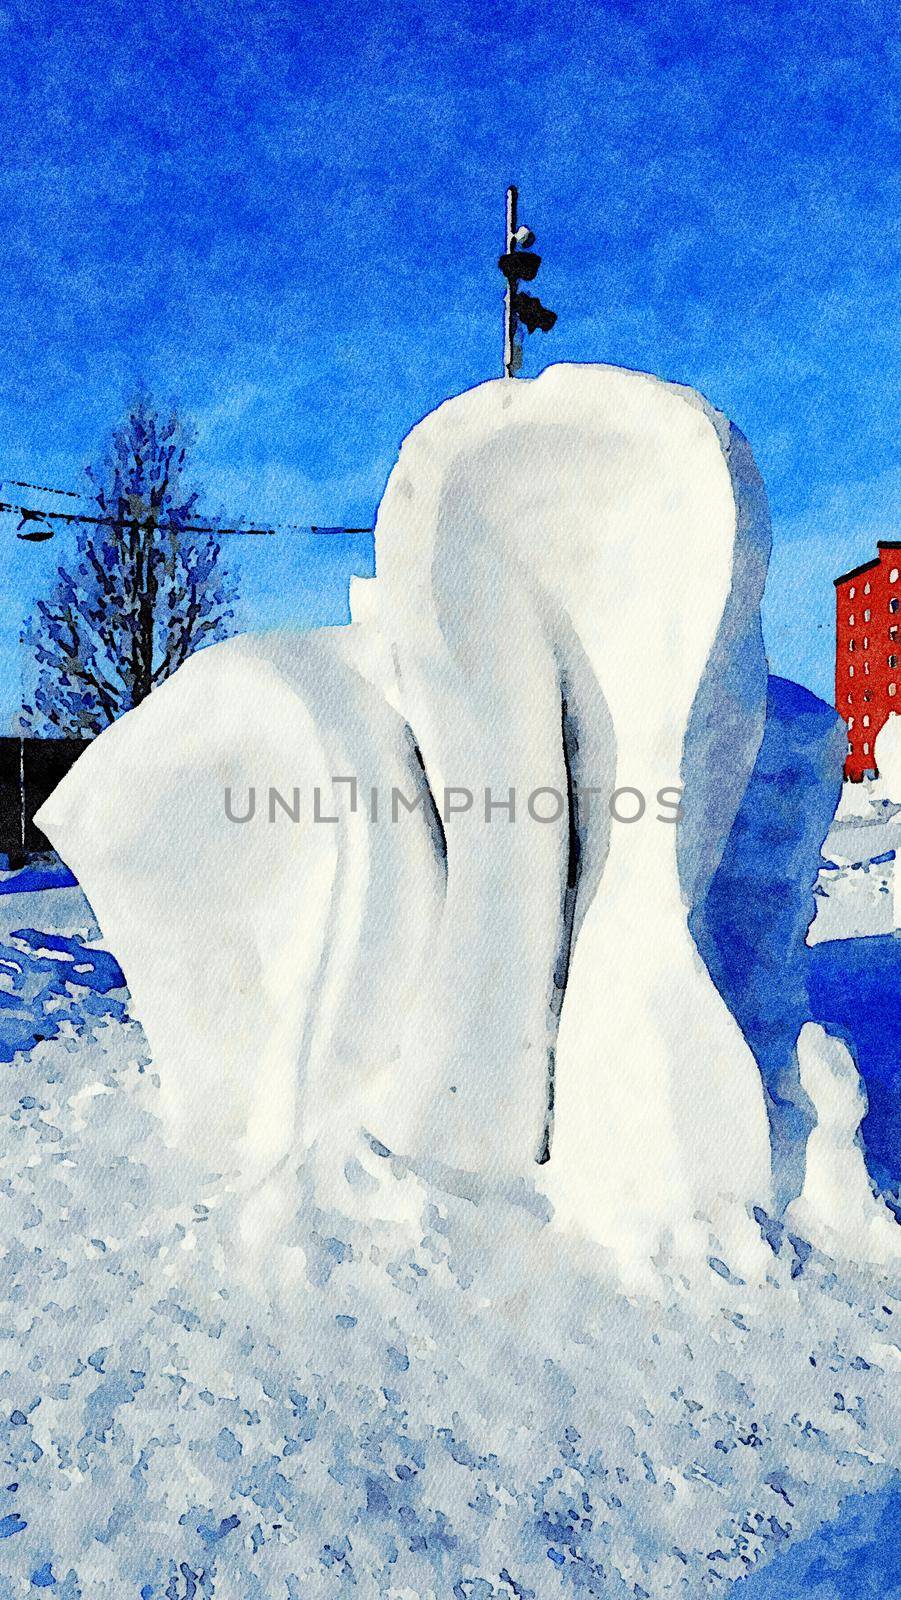 Kiruna, Sweden, February 25, 2020. Watercolor representing ice sculptures in the public park of the city of Kiruna